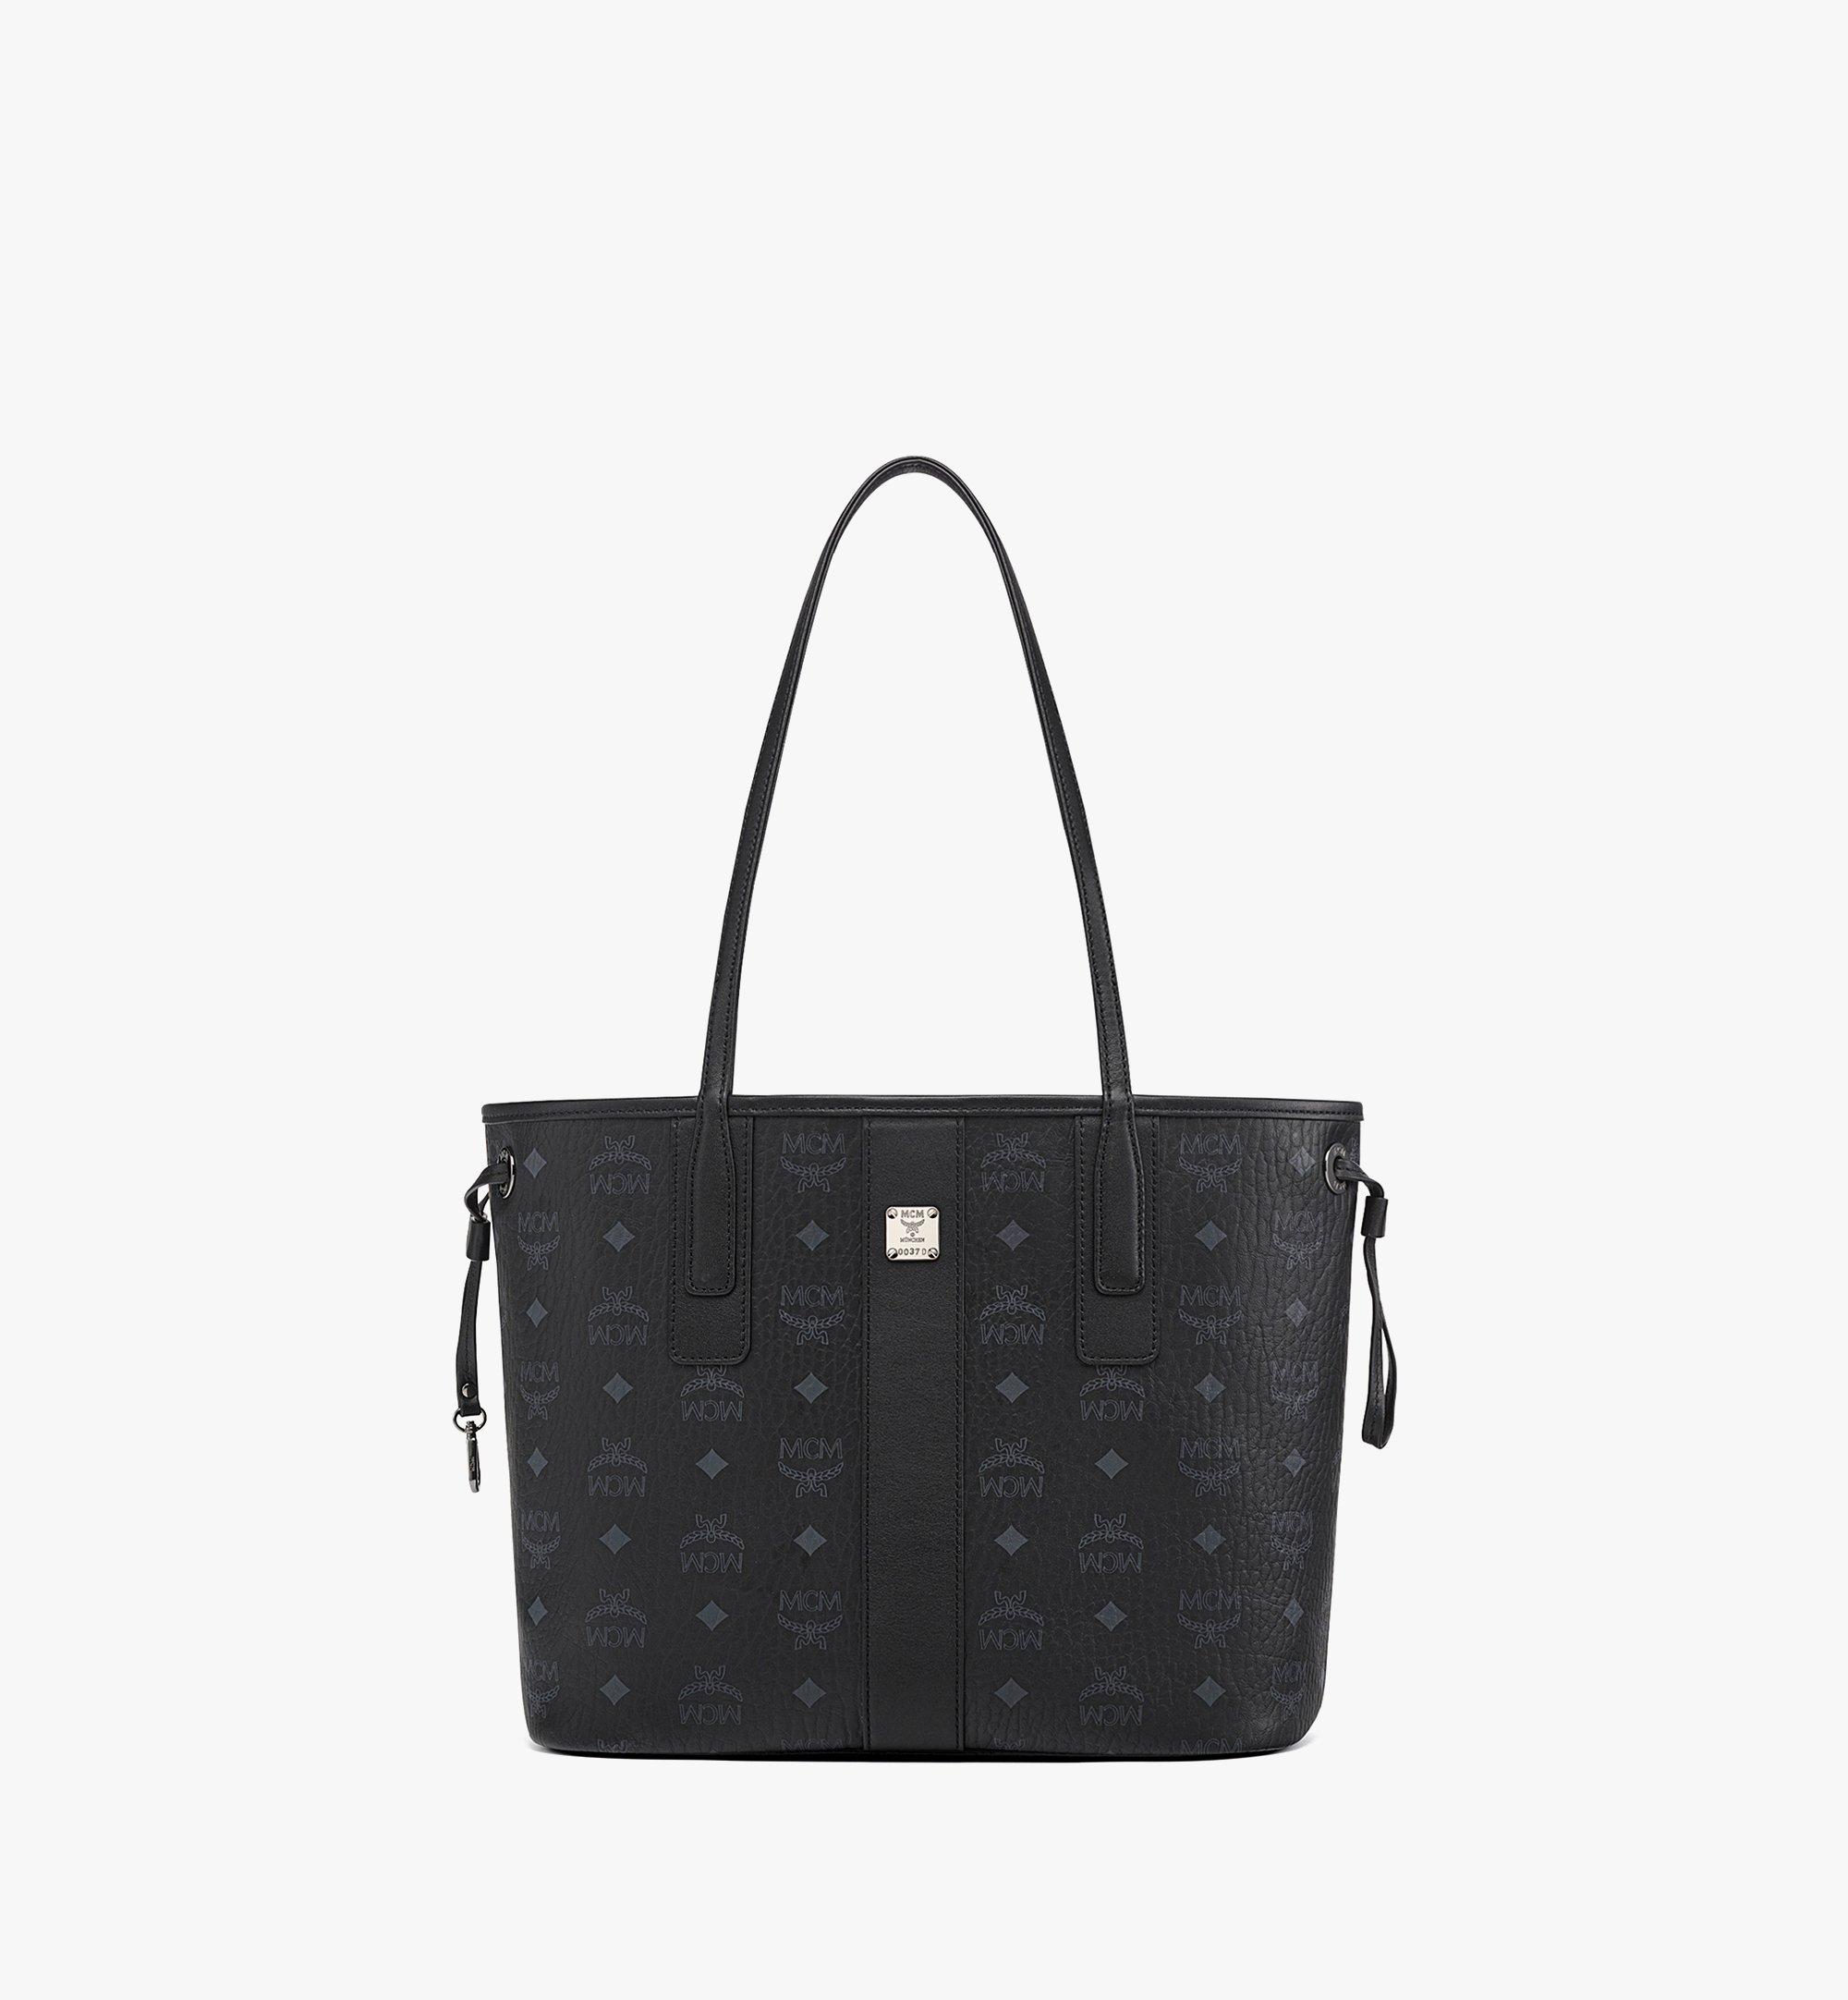 45 cm / 17.7 Ottomar Weekender Bag in Maxi Visetos Black